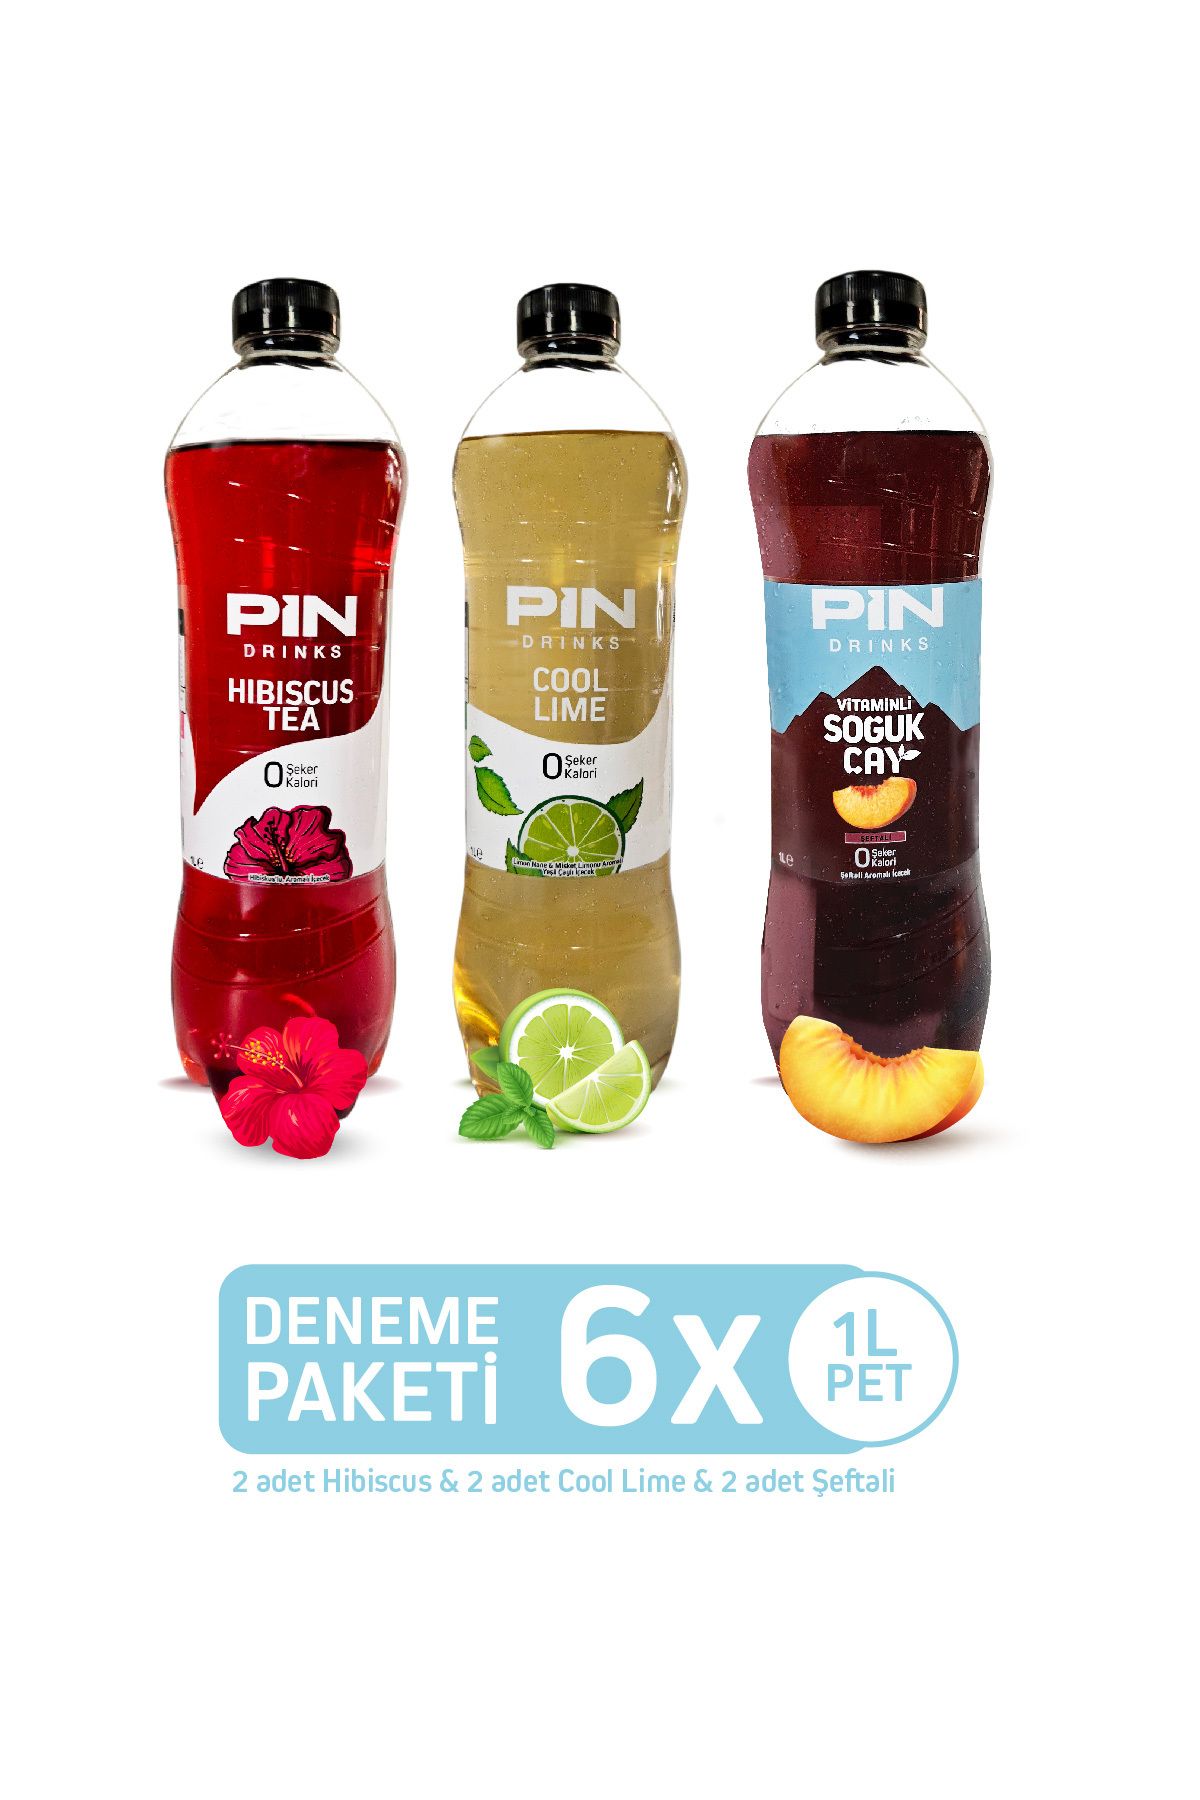 Pin Hibiskus& Cool Lime & Şeftali Soğuk Çay Deneme Paketi Şekersiz & Kalorisiz 6 Adet X 1 Litre